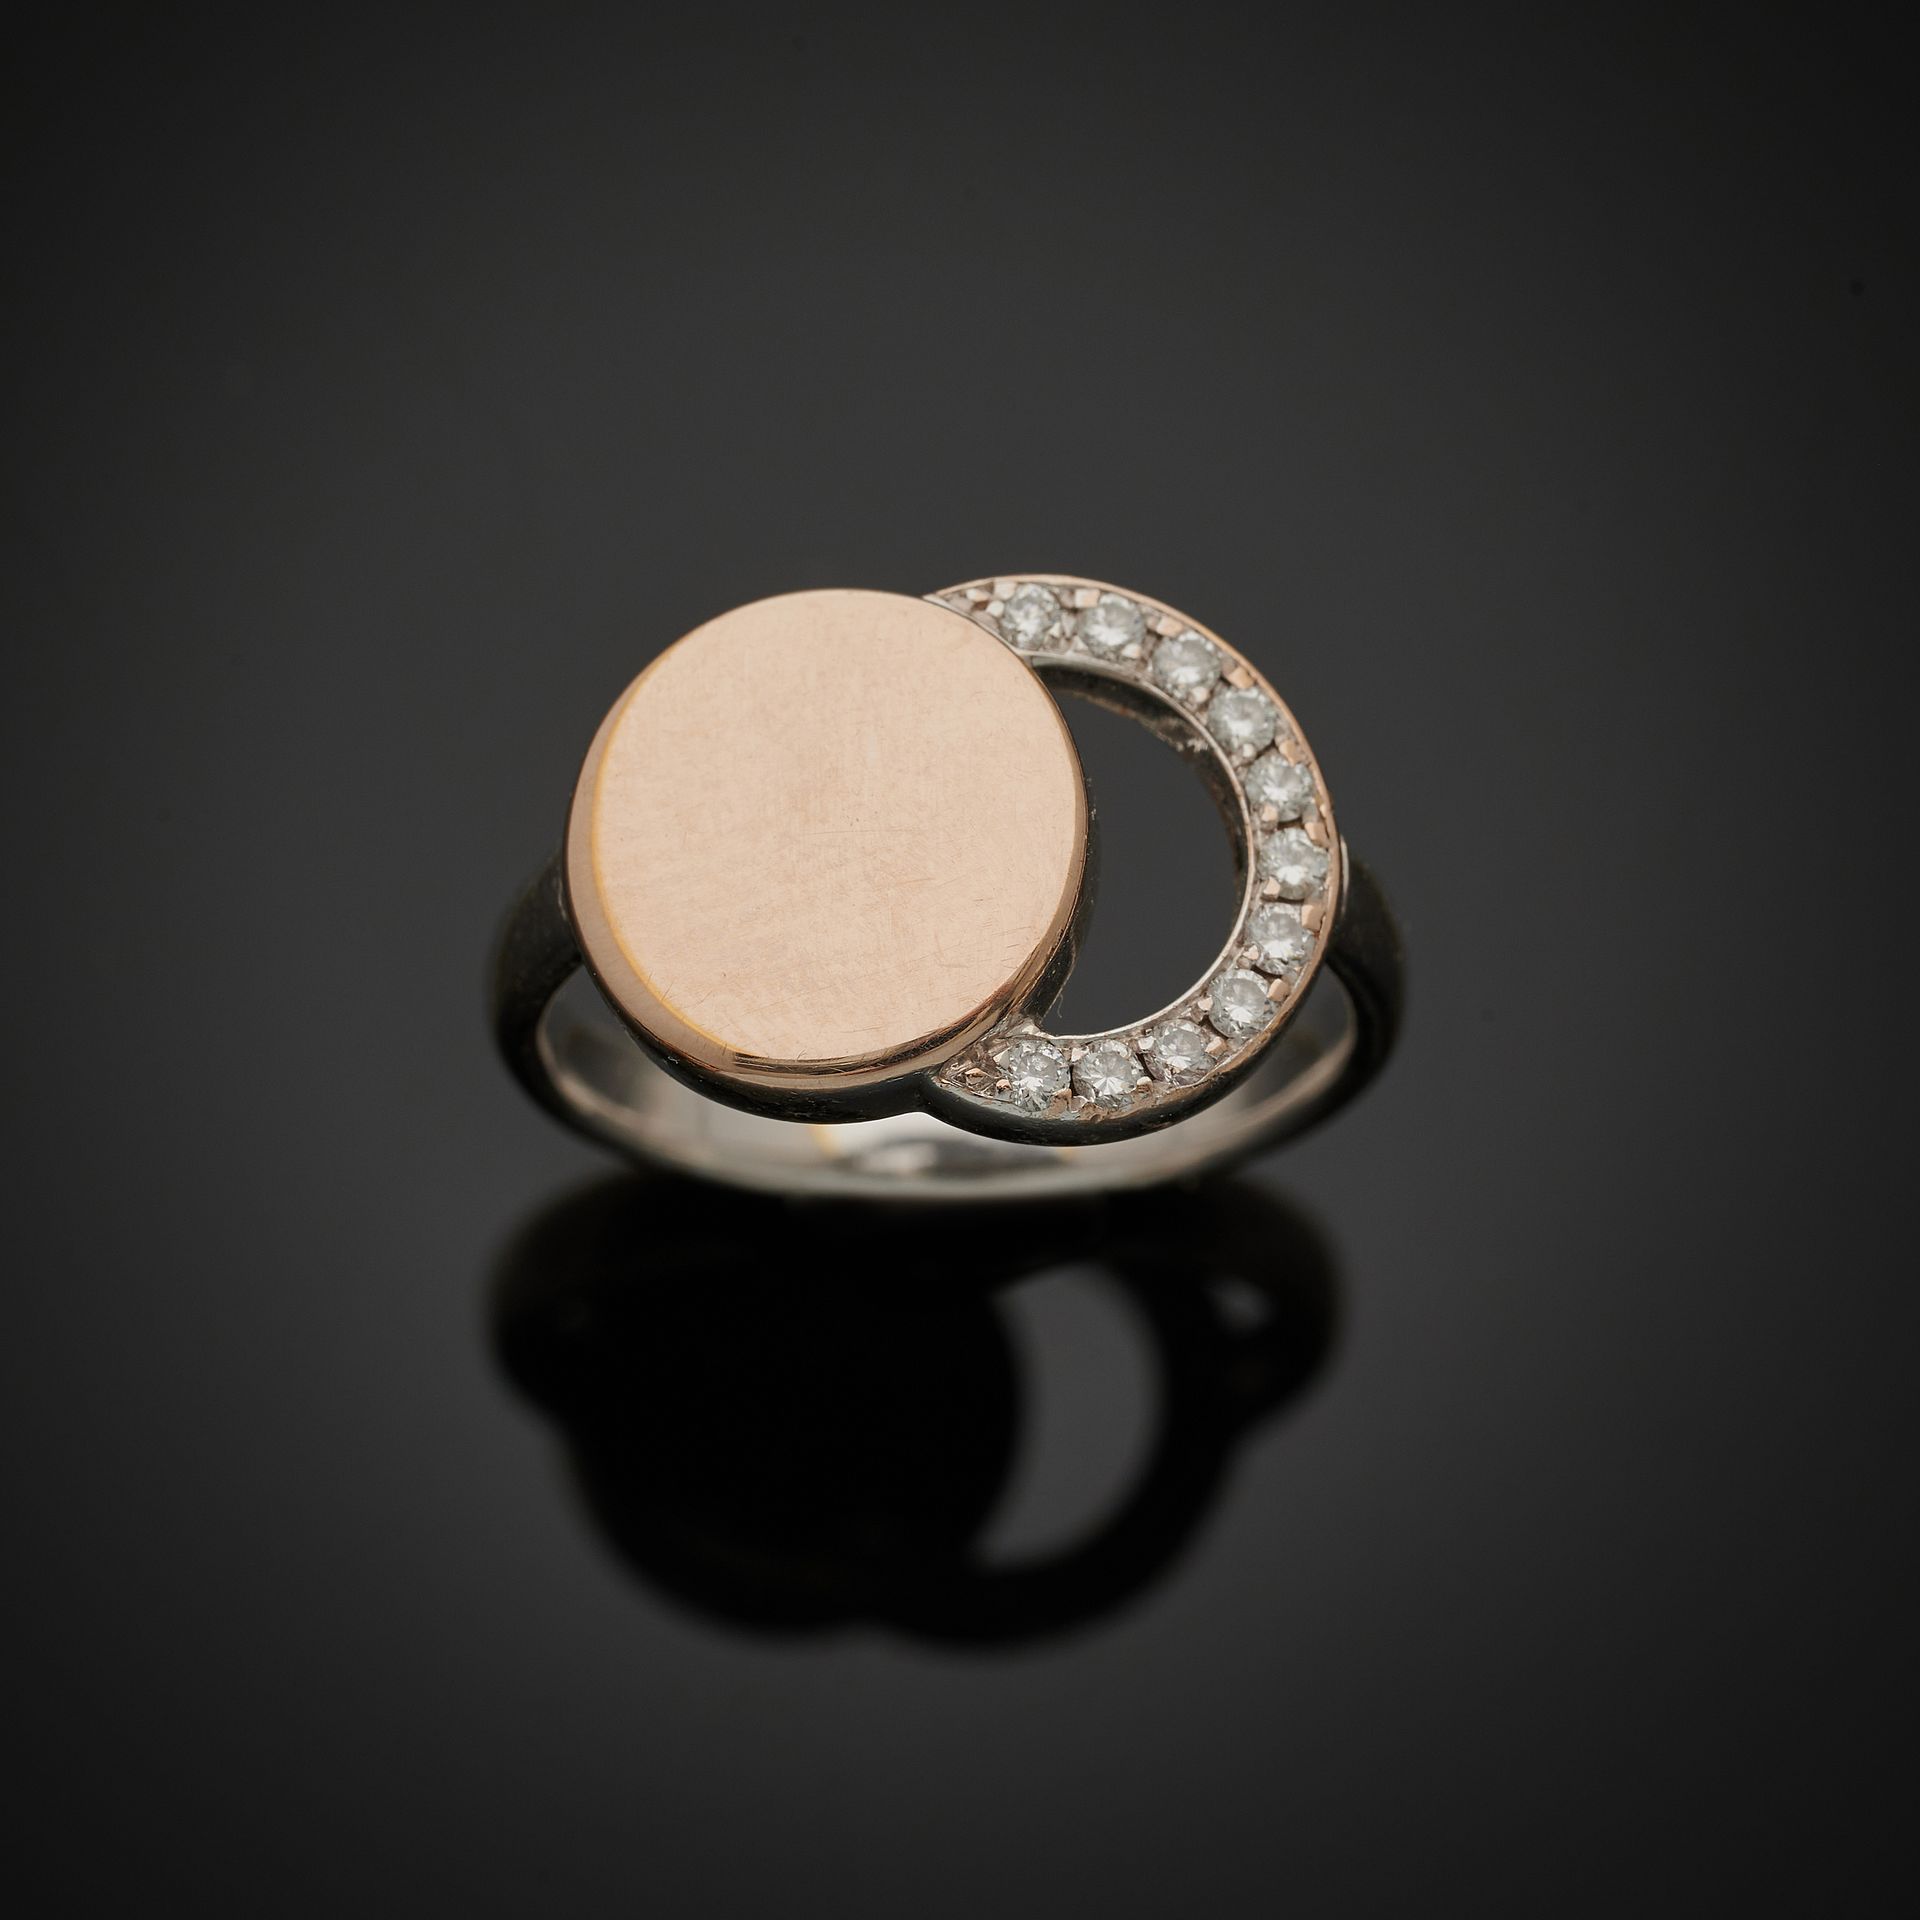 Null DINH VAN.手铐模型。
白金戒指上镶嵌着两个圆盘的交错图案，其中一个镶嵌着明亮式切割钻石。已签名。
毛重：6.7克；TDD：51。